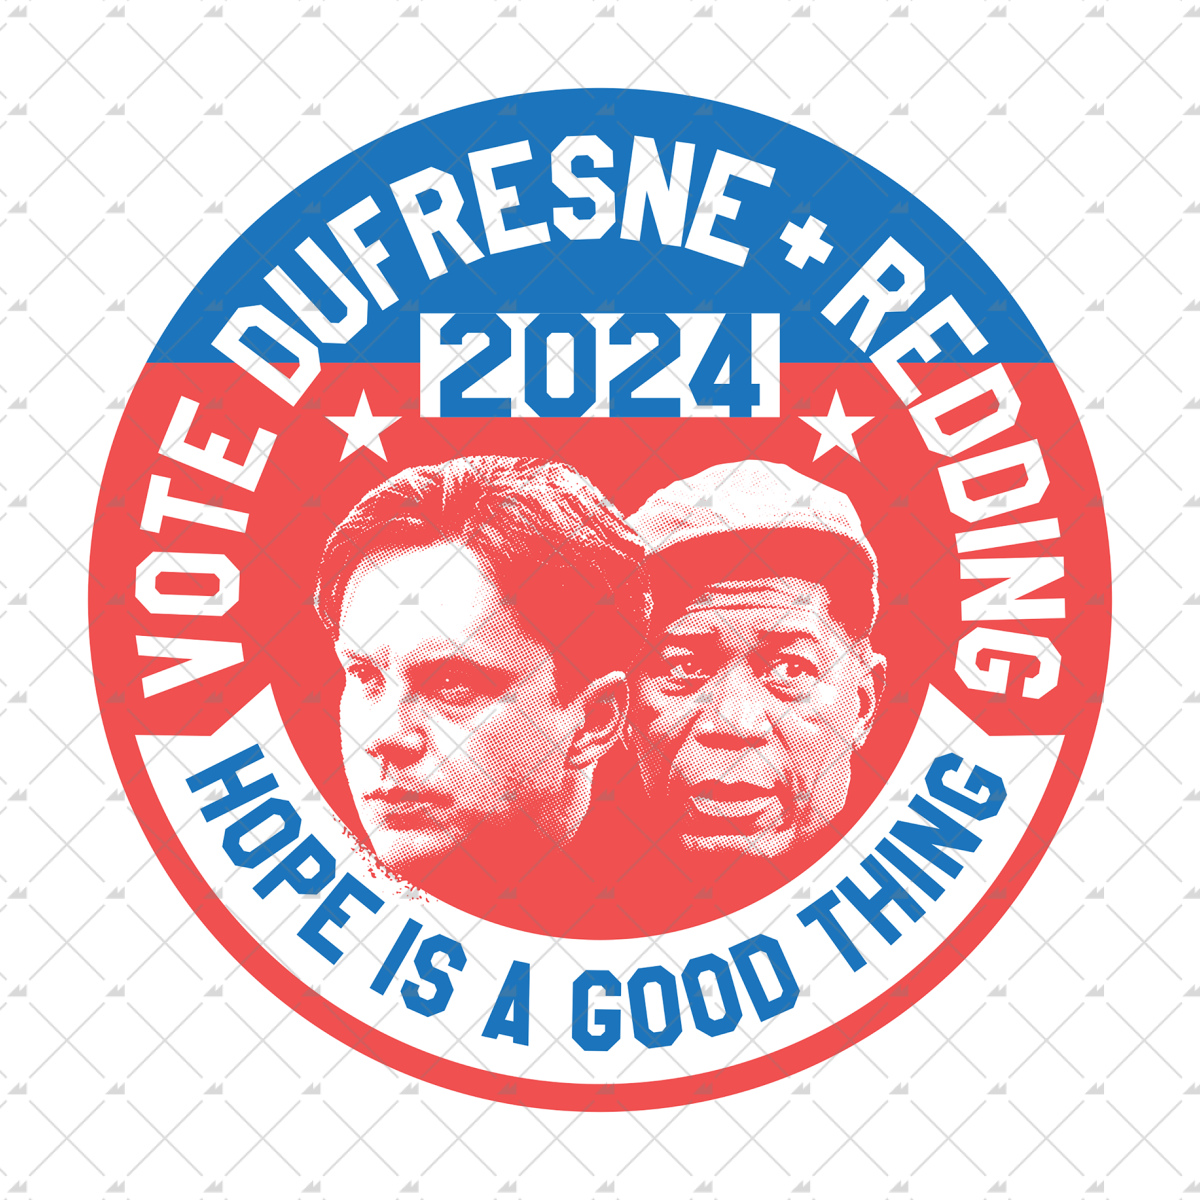 Dufresne & Redding 2024 - Sticker